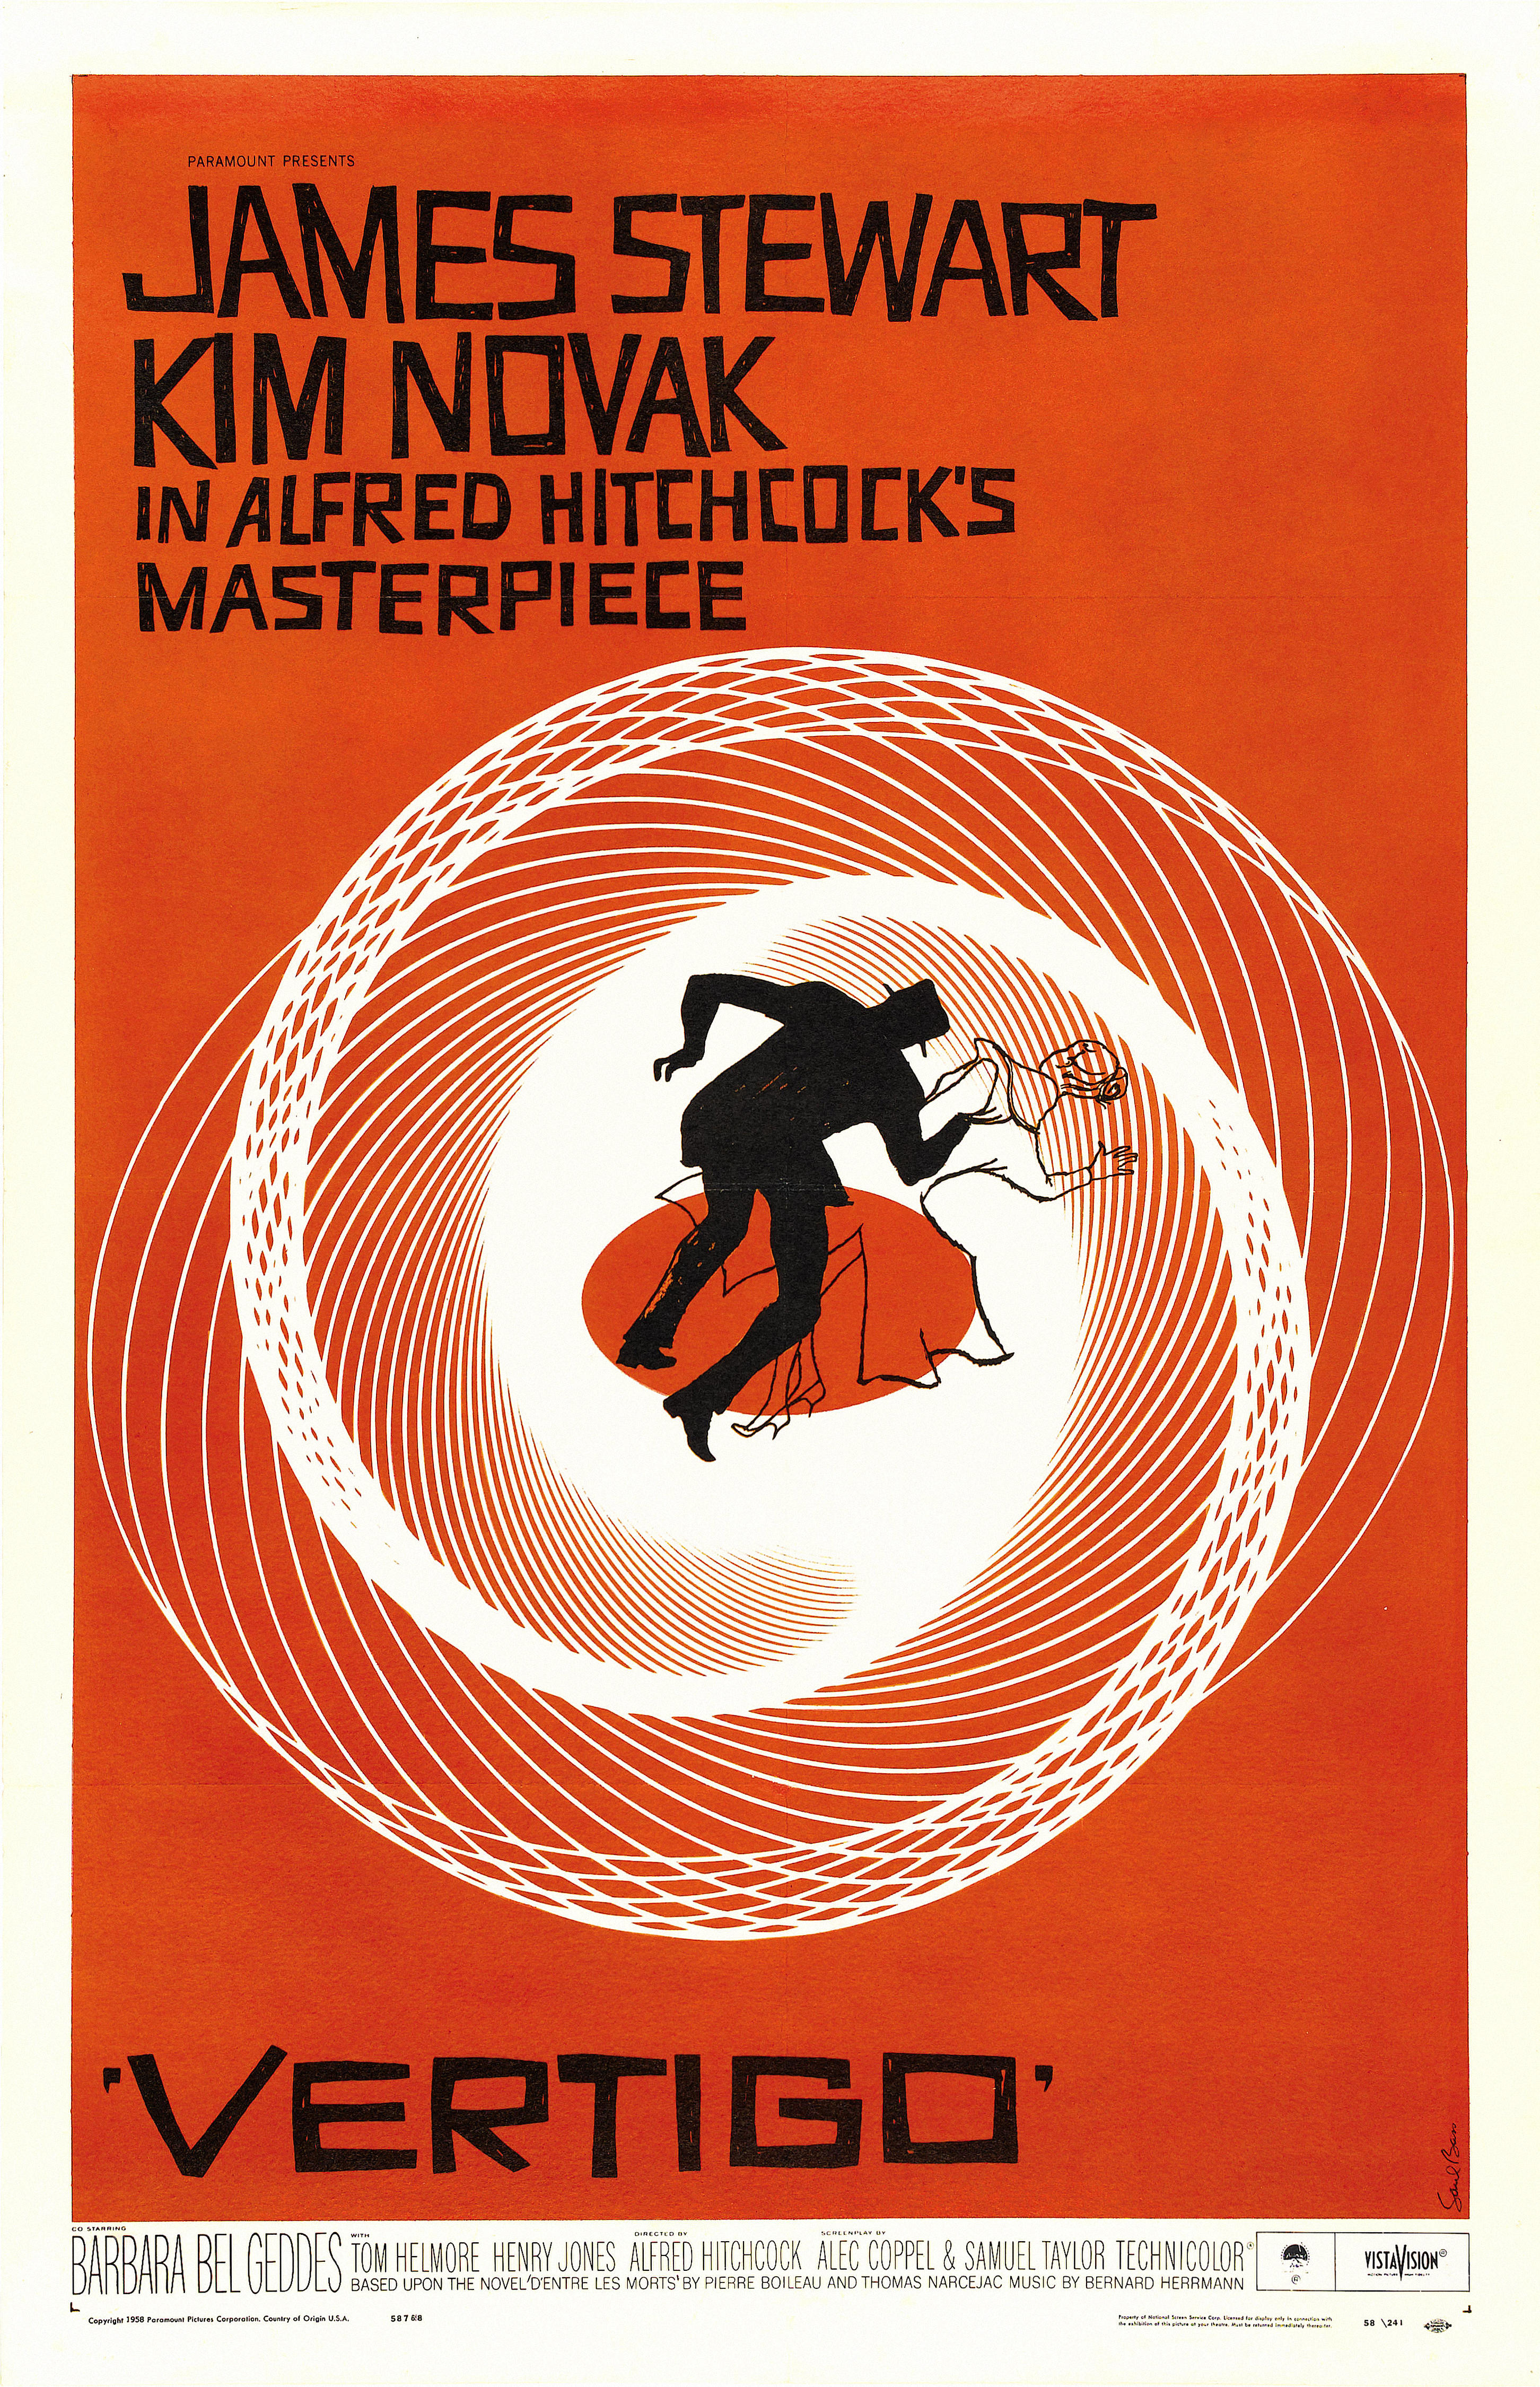 An artistic image of figures falling into a spiral on the Vertigo movie poster.